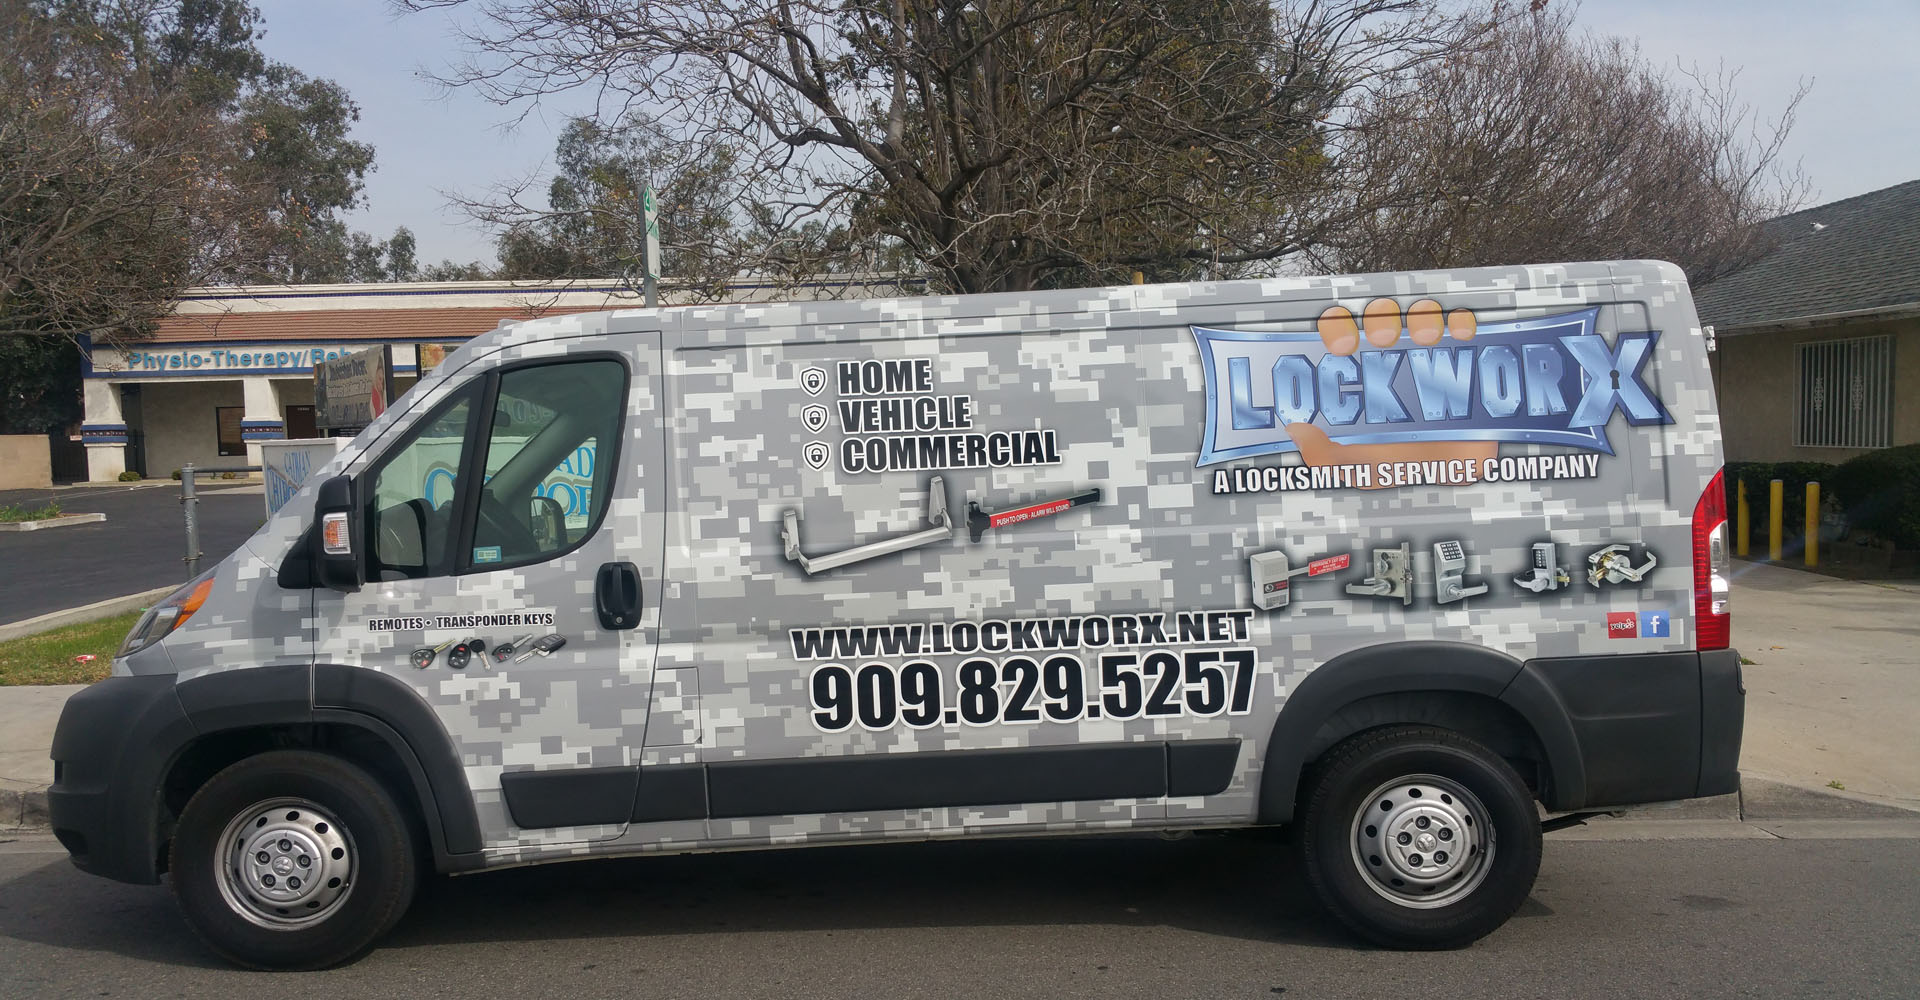 Lockworx Locksmith Services